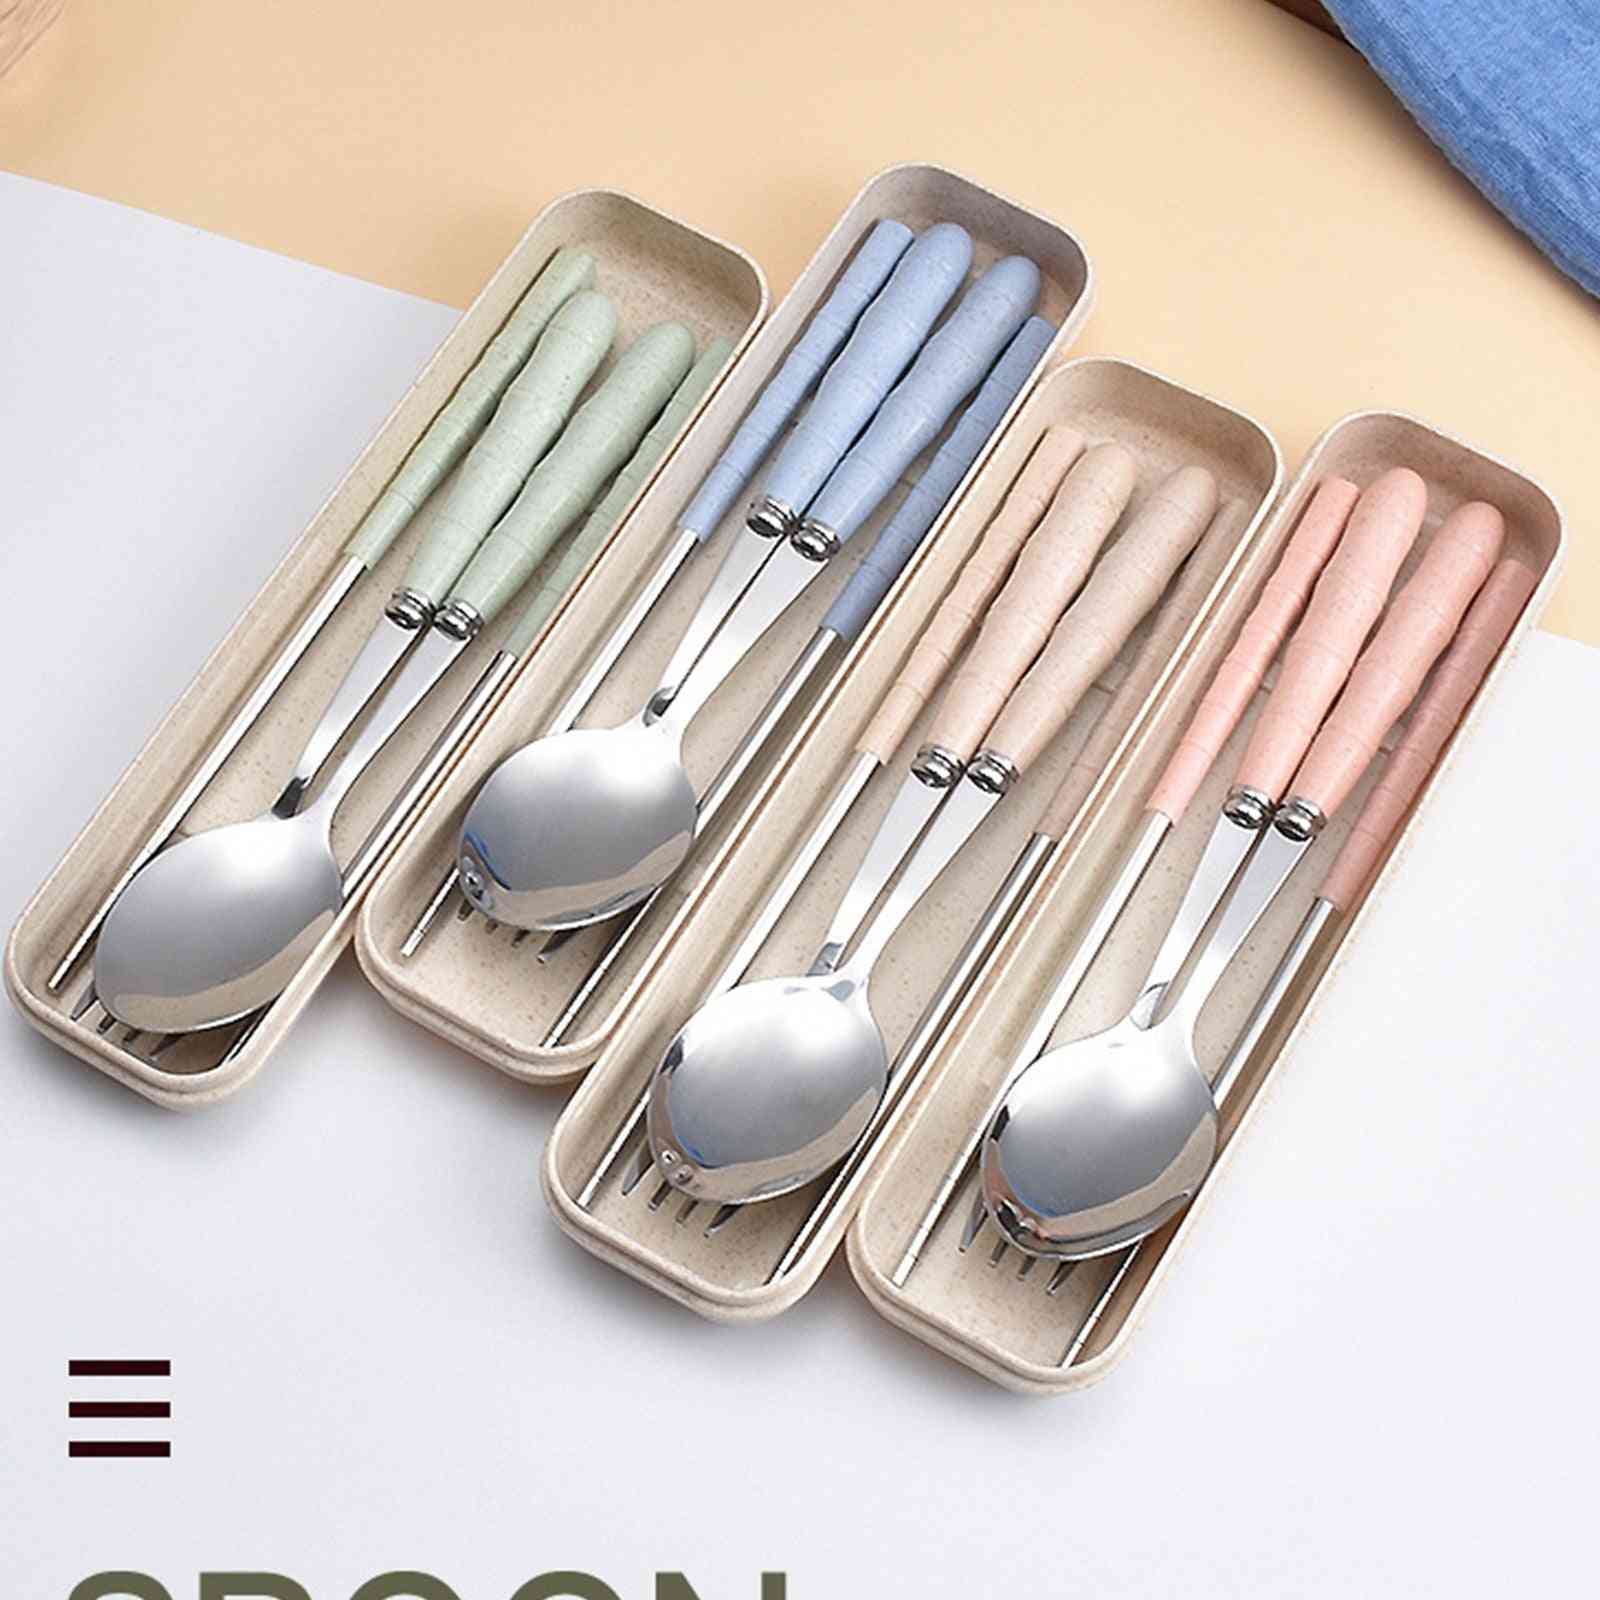 3-in-1 Stainless Steel Fork Spoon Chopsticks Set